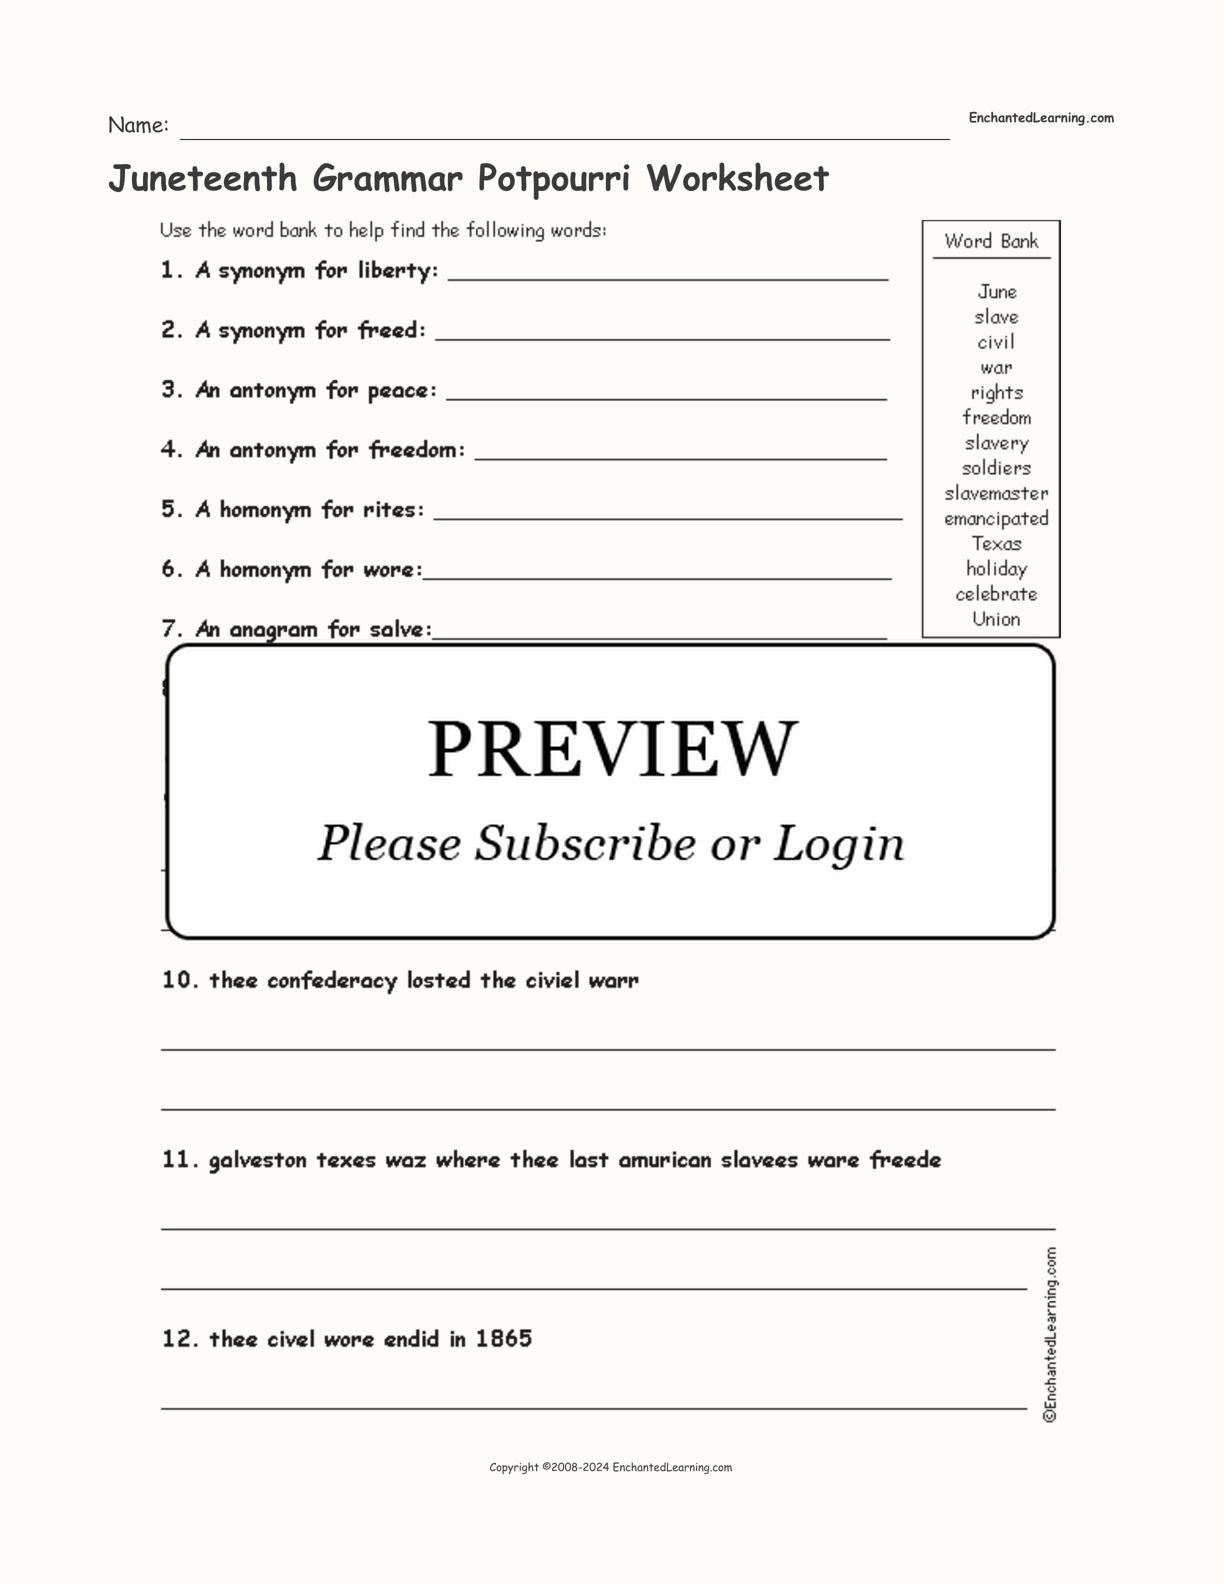 Juneteenth Grammar Potpourri Worksheet interactive worksheet page 1